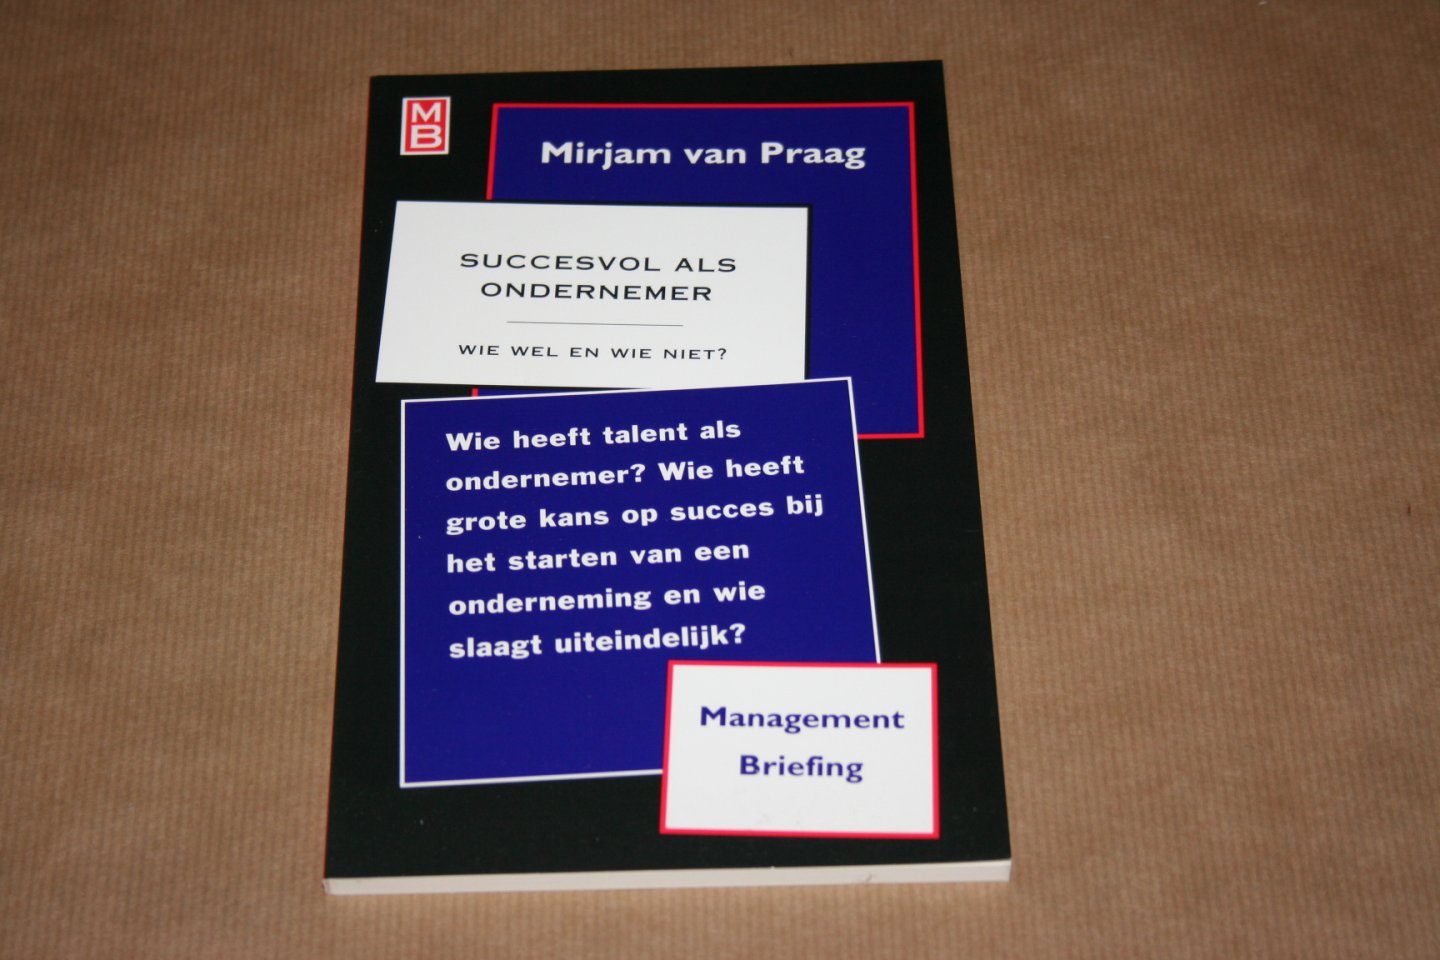 Mirjam van Praag - Succesvol als ondernemer  (Management Briefing)